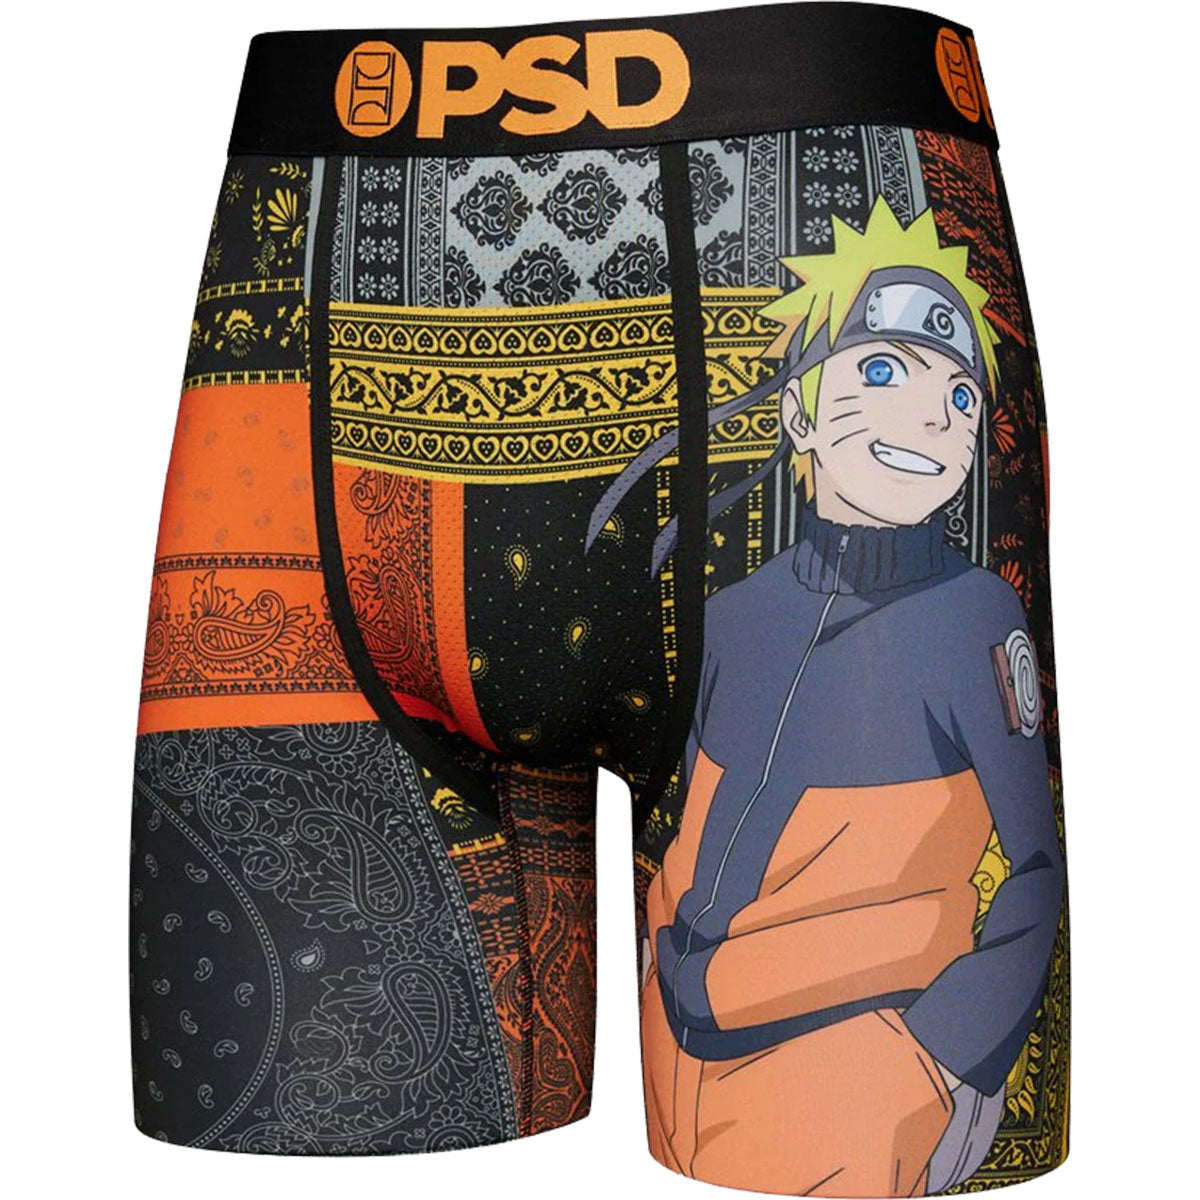 PSD Underwear Women's Sports Bra - Naruto